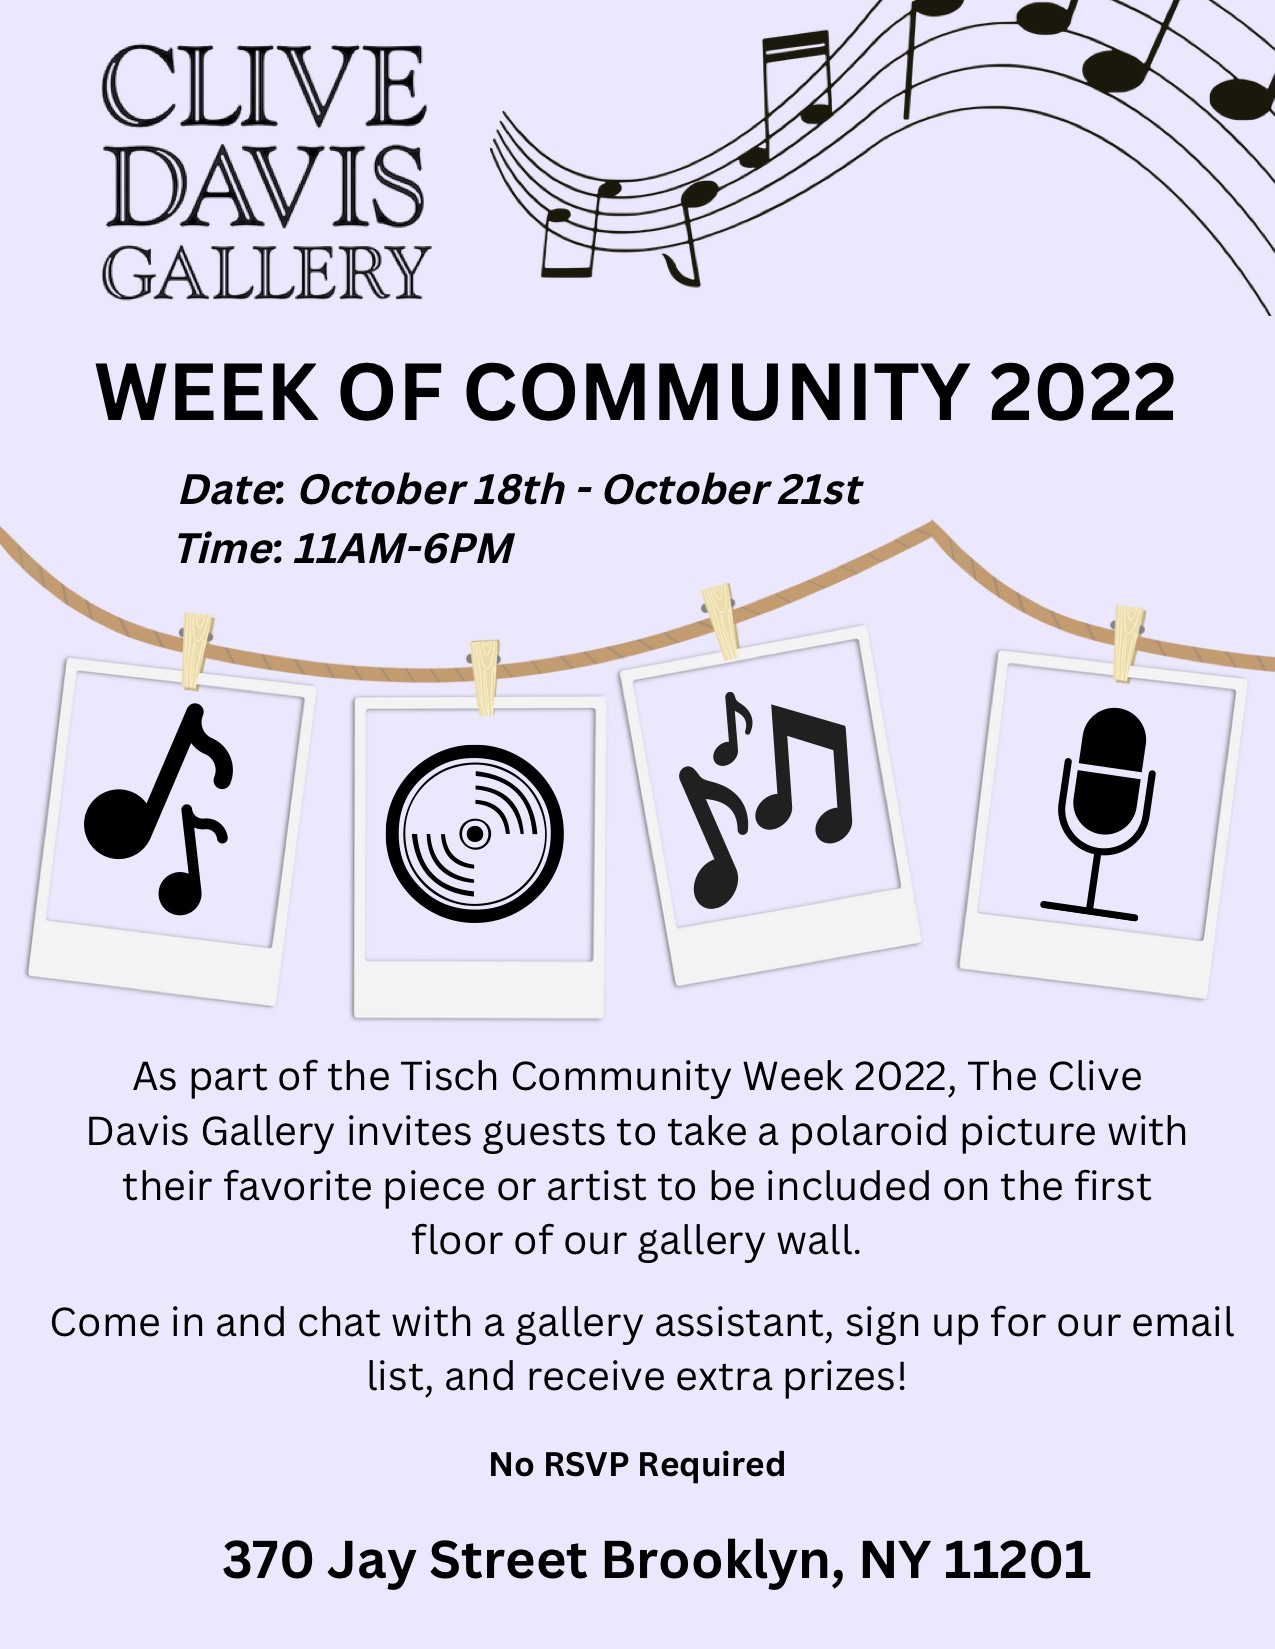 Clive Davis Gallery Week of Community 2022